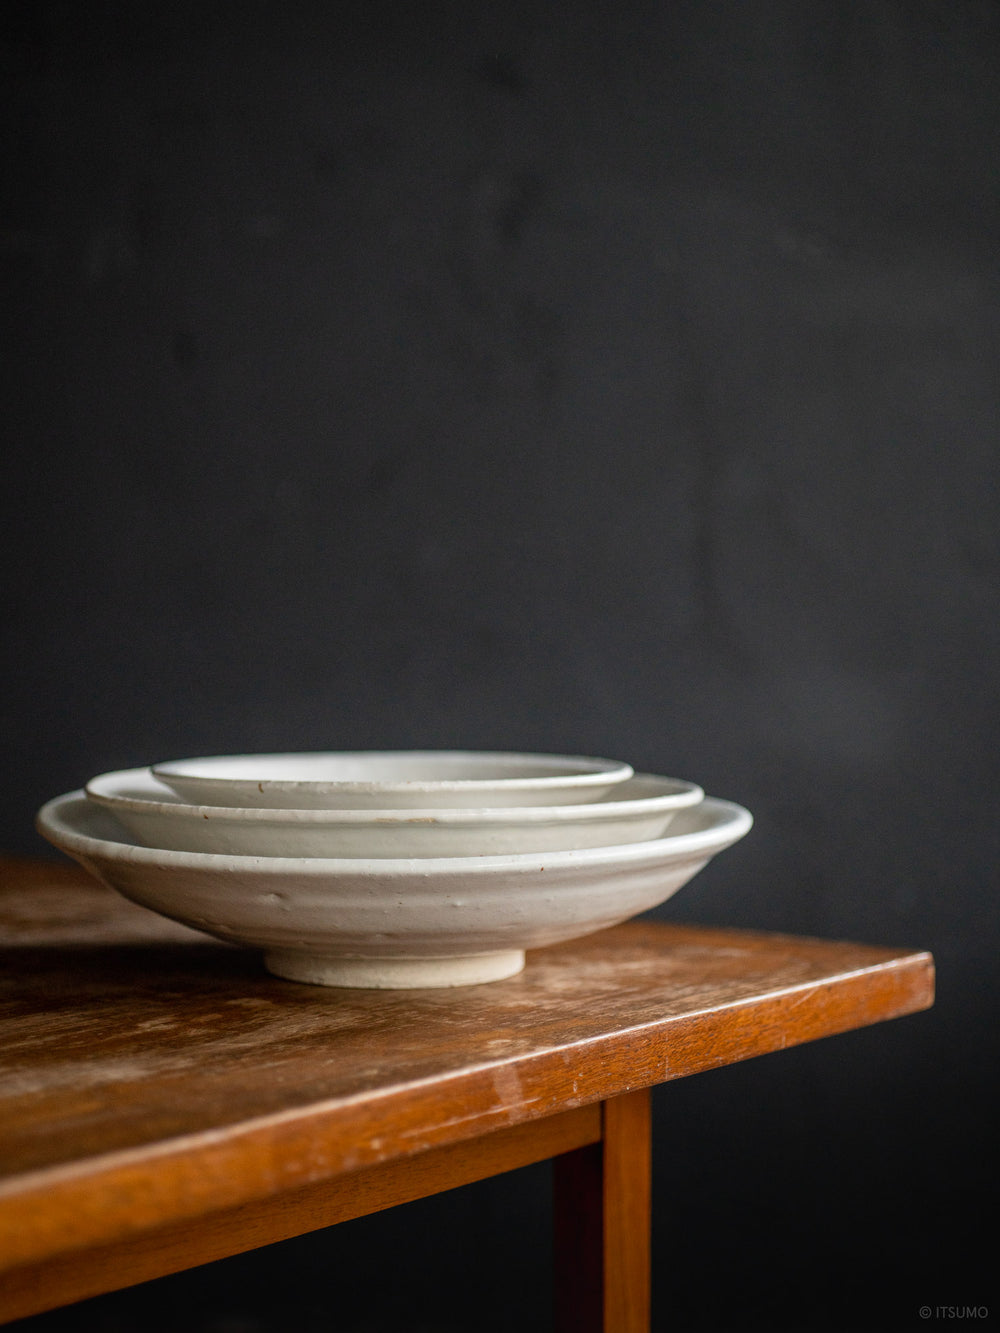 Azmaya iga ware pottery plates in three sizes: small, medium, and large